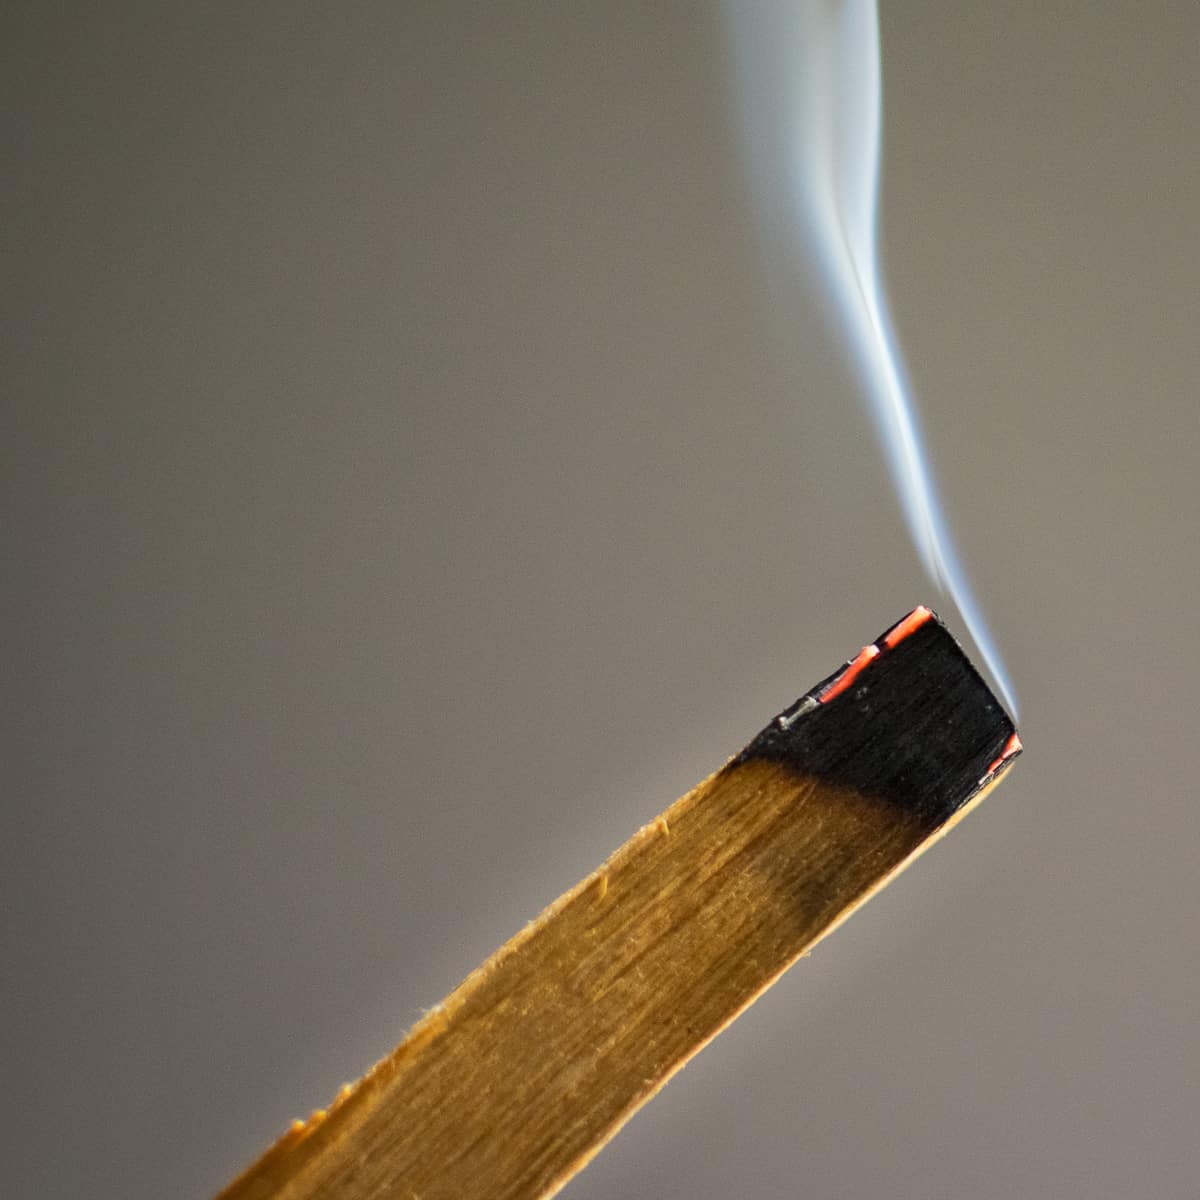 A lit stick of palo santo wood smoking.